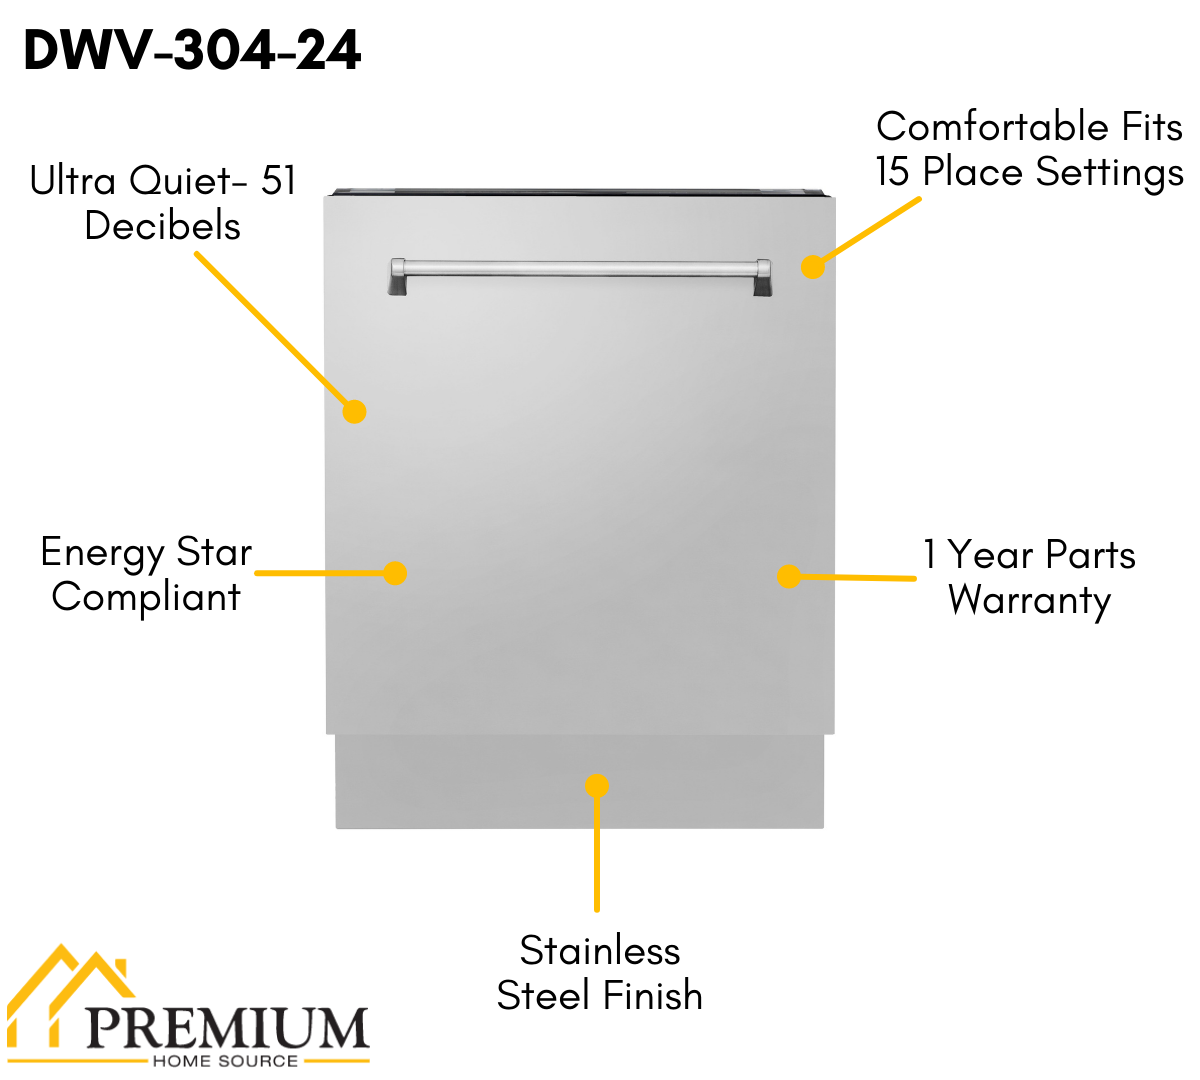 ZLINE Appliance Package - 48 in. Gas Range, Range Hood, 3 Rack Dishwasher, 3KP-RGRH48-DWV